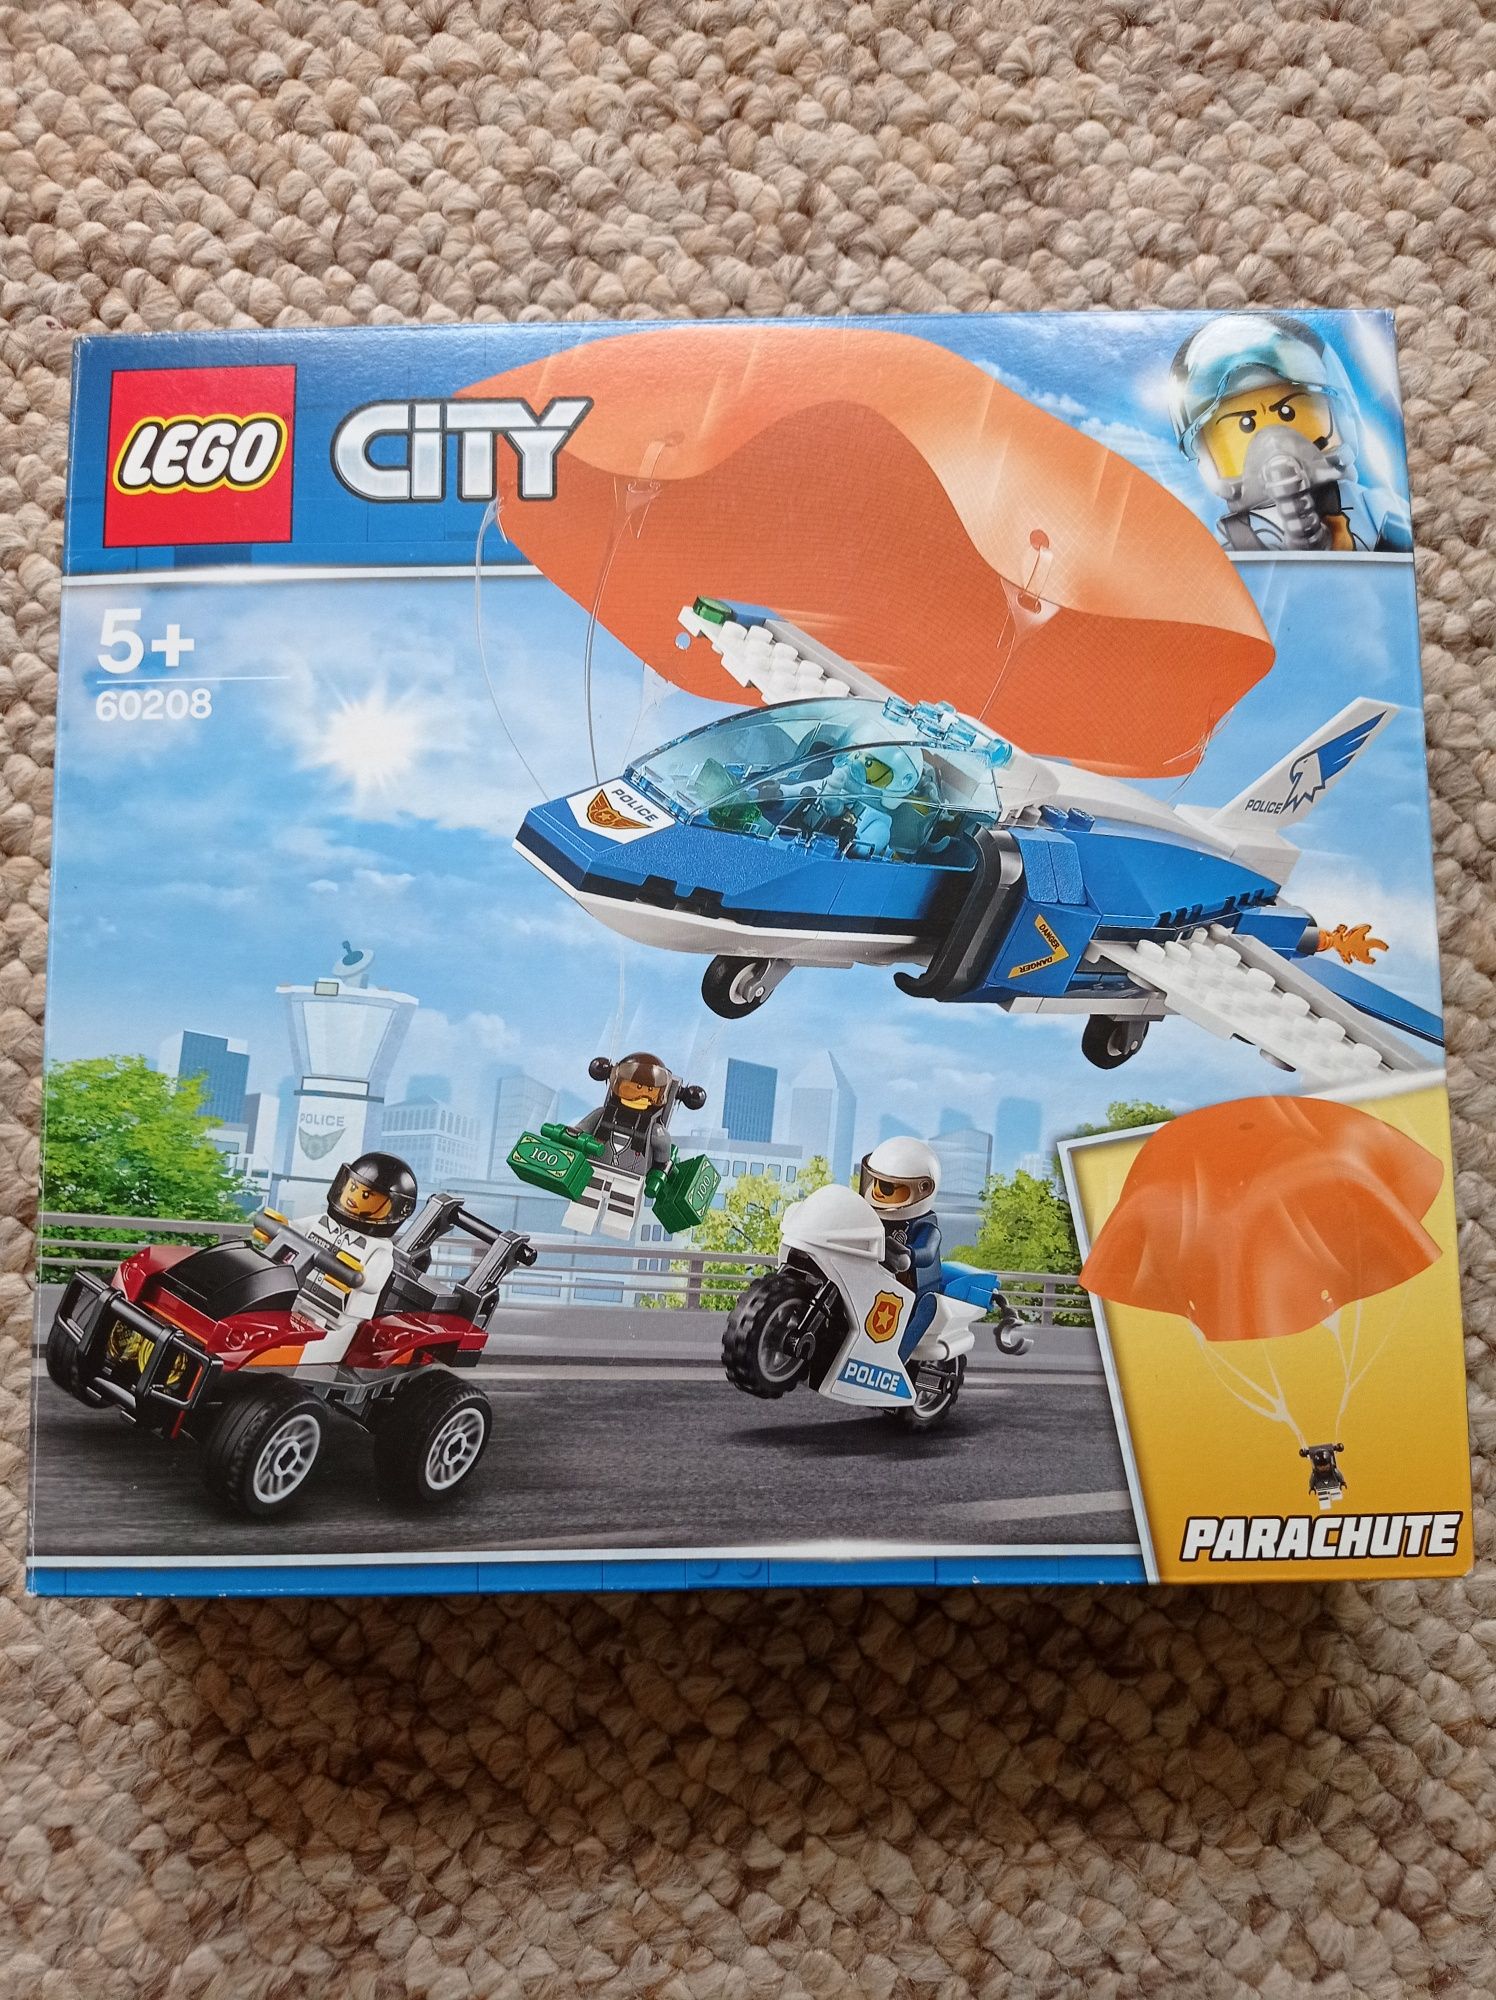 LEGO city model 60208